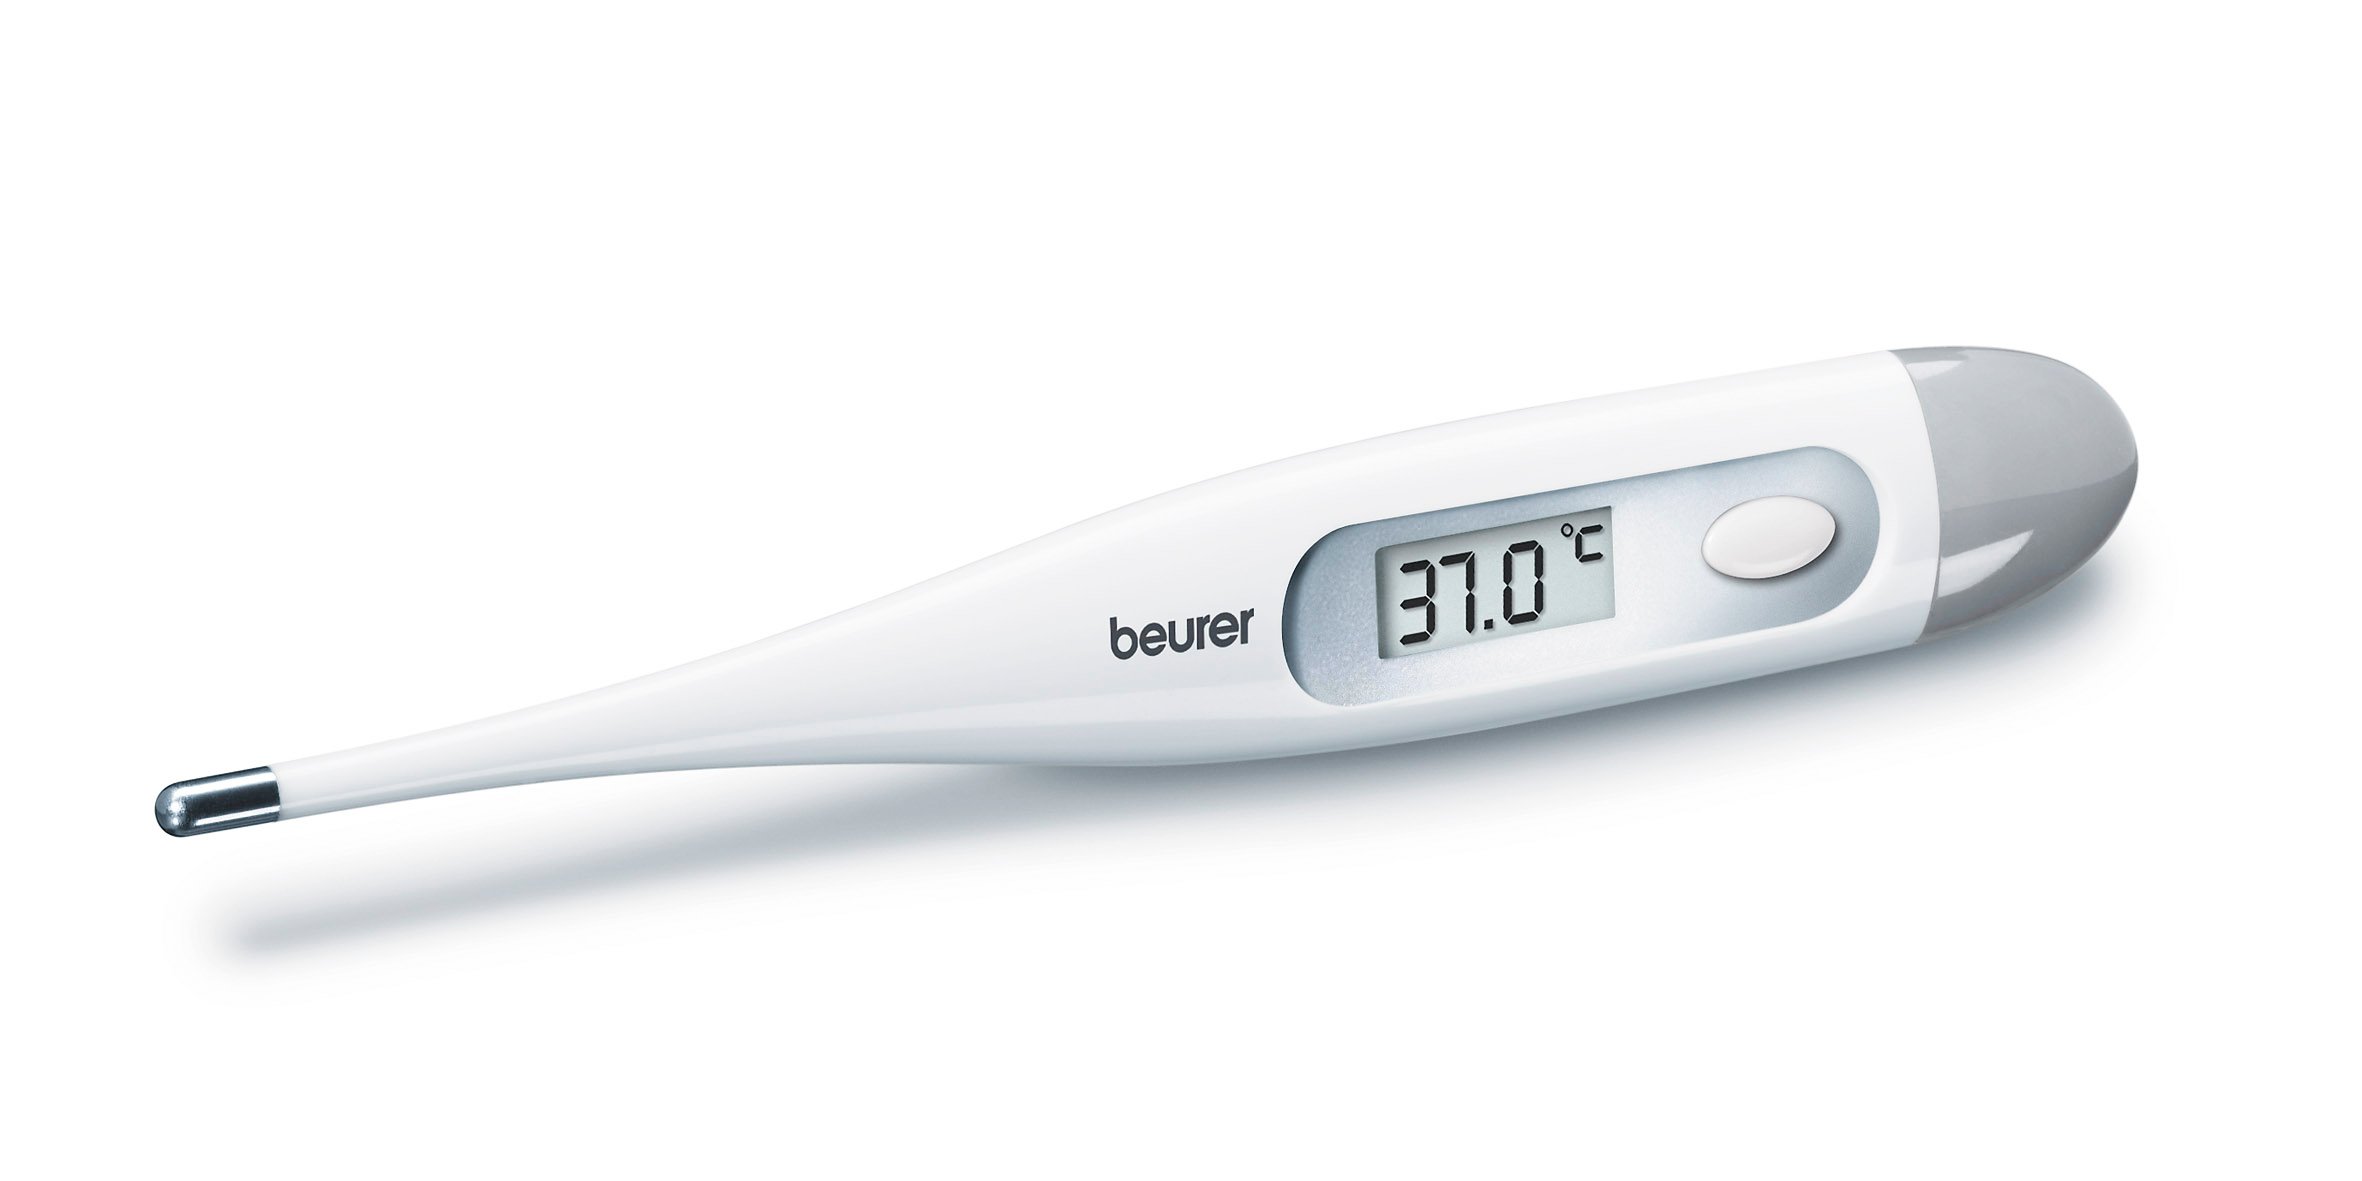 Beurer - FT 10 Clinical Thermometer in White - 5 Years Warranty - Helse og personlig pleie